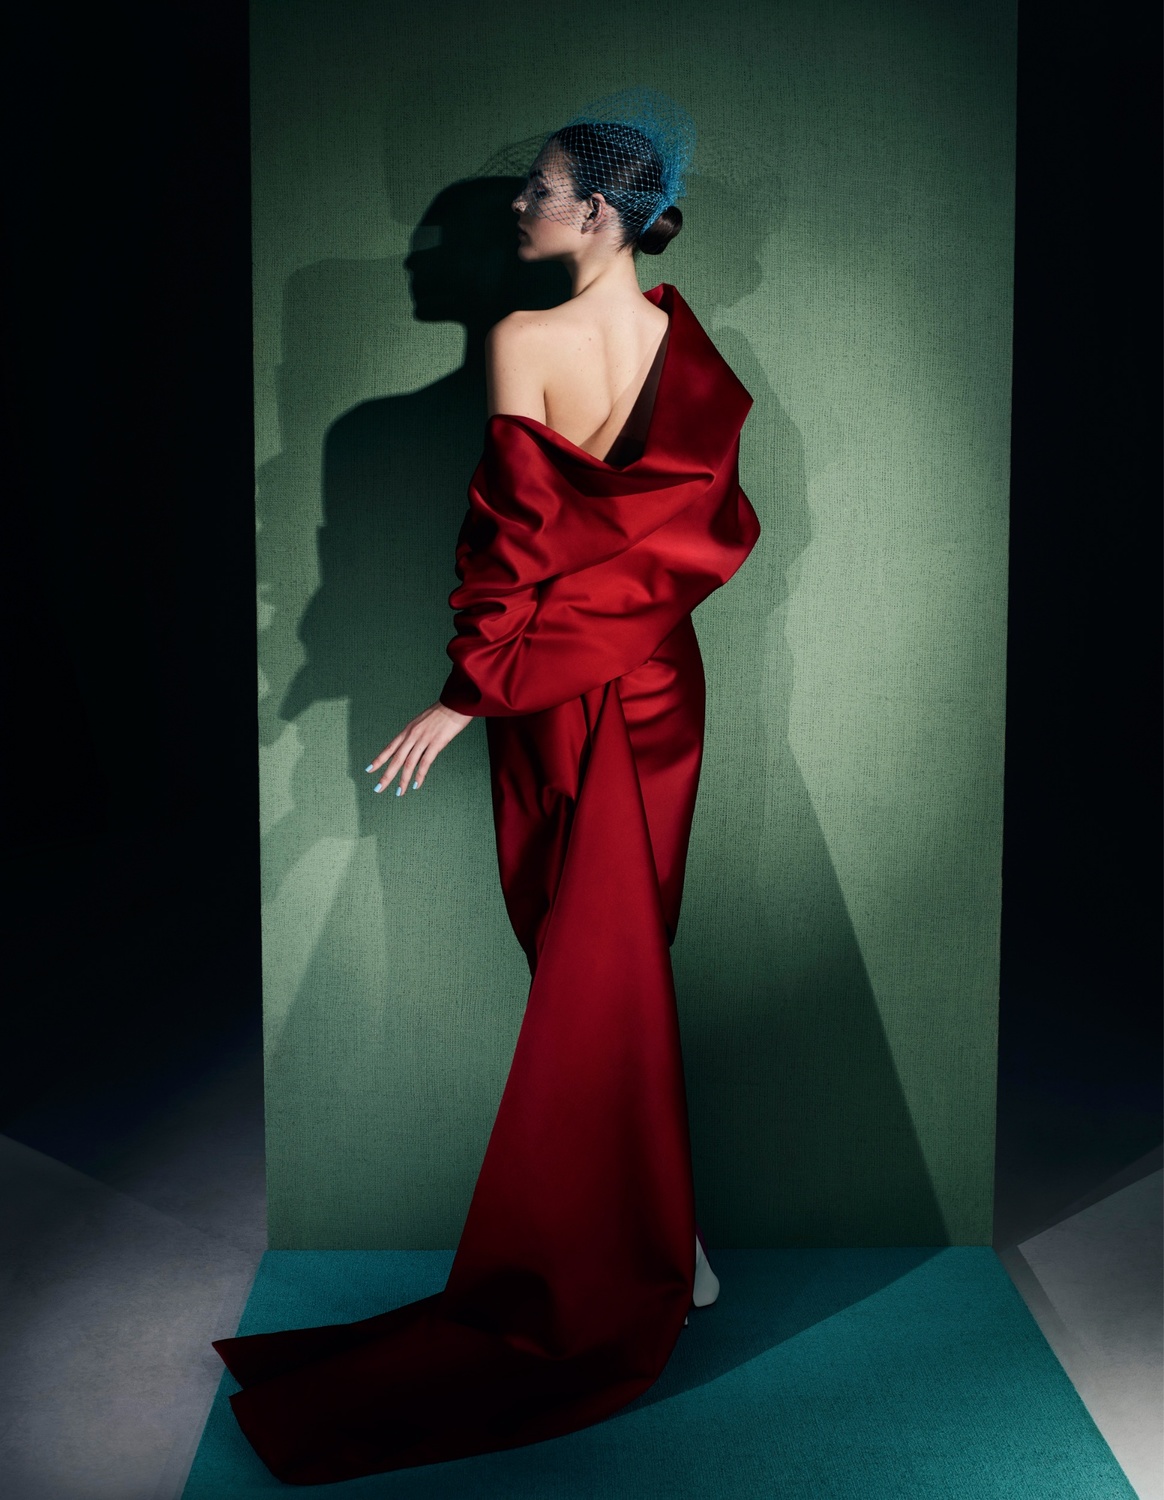 Vittoria Ceretti in Vogue China March 2019 by Solve Sundsbø